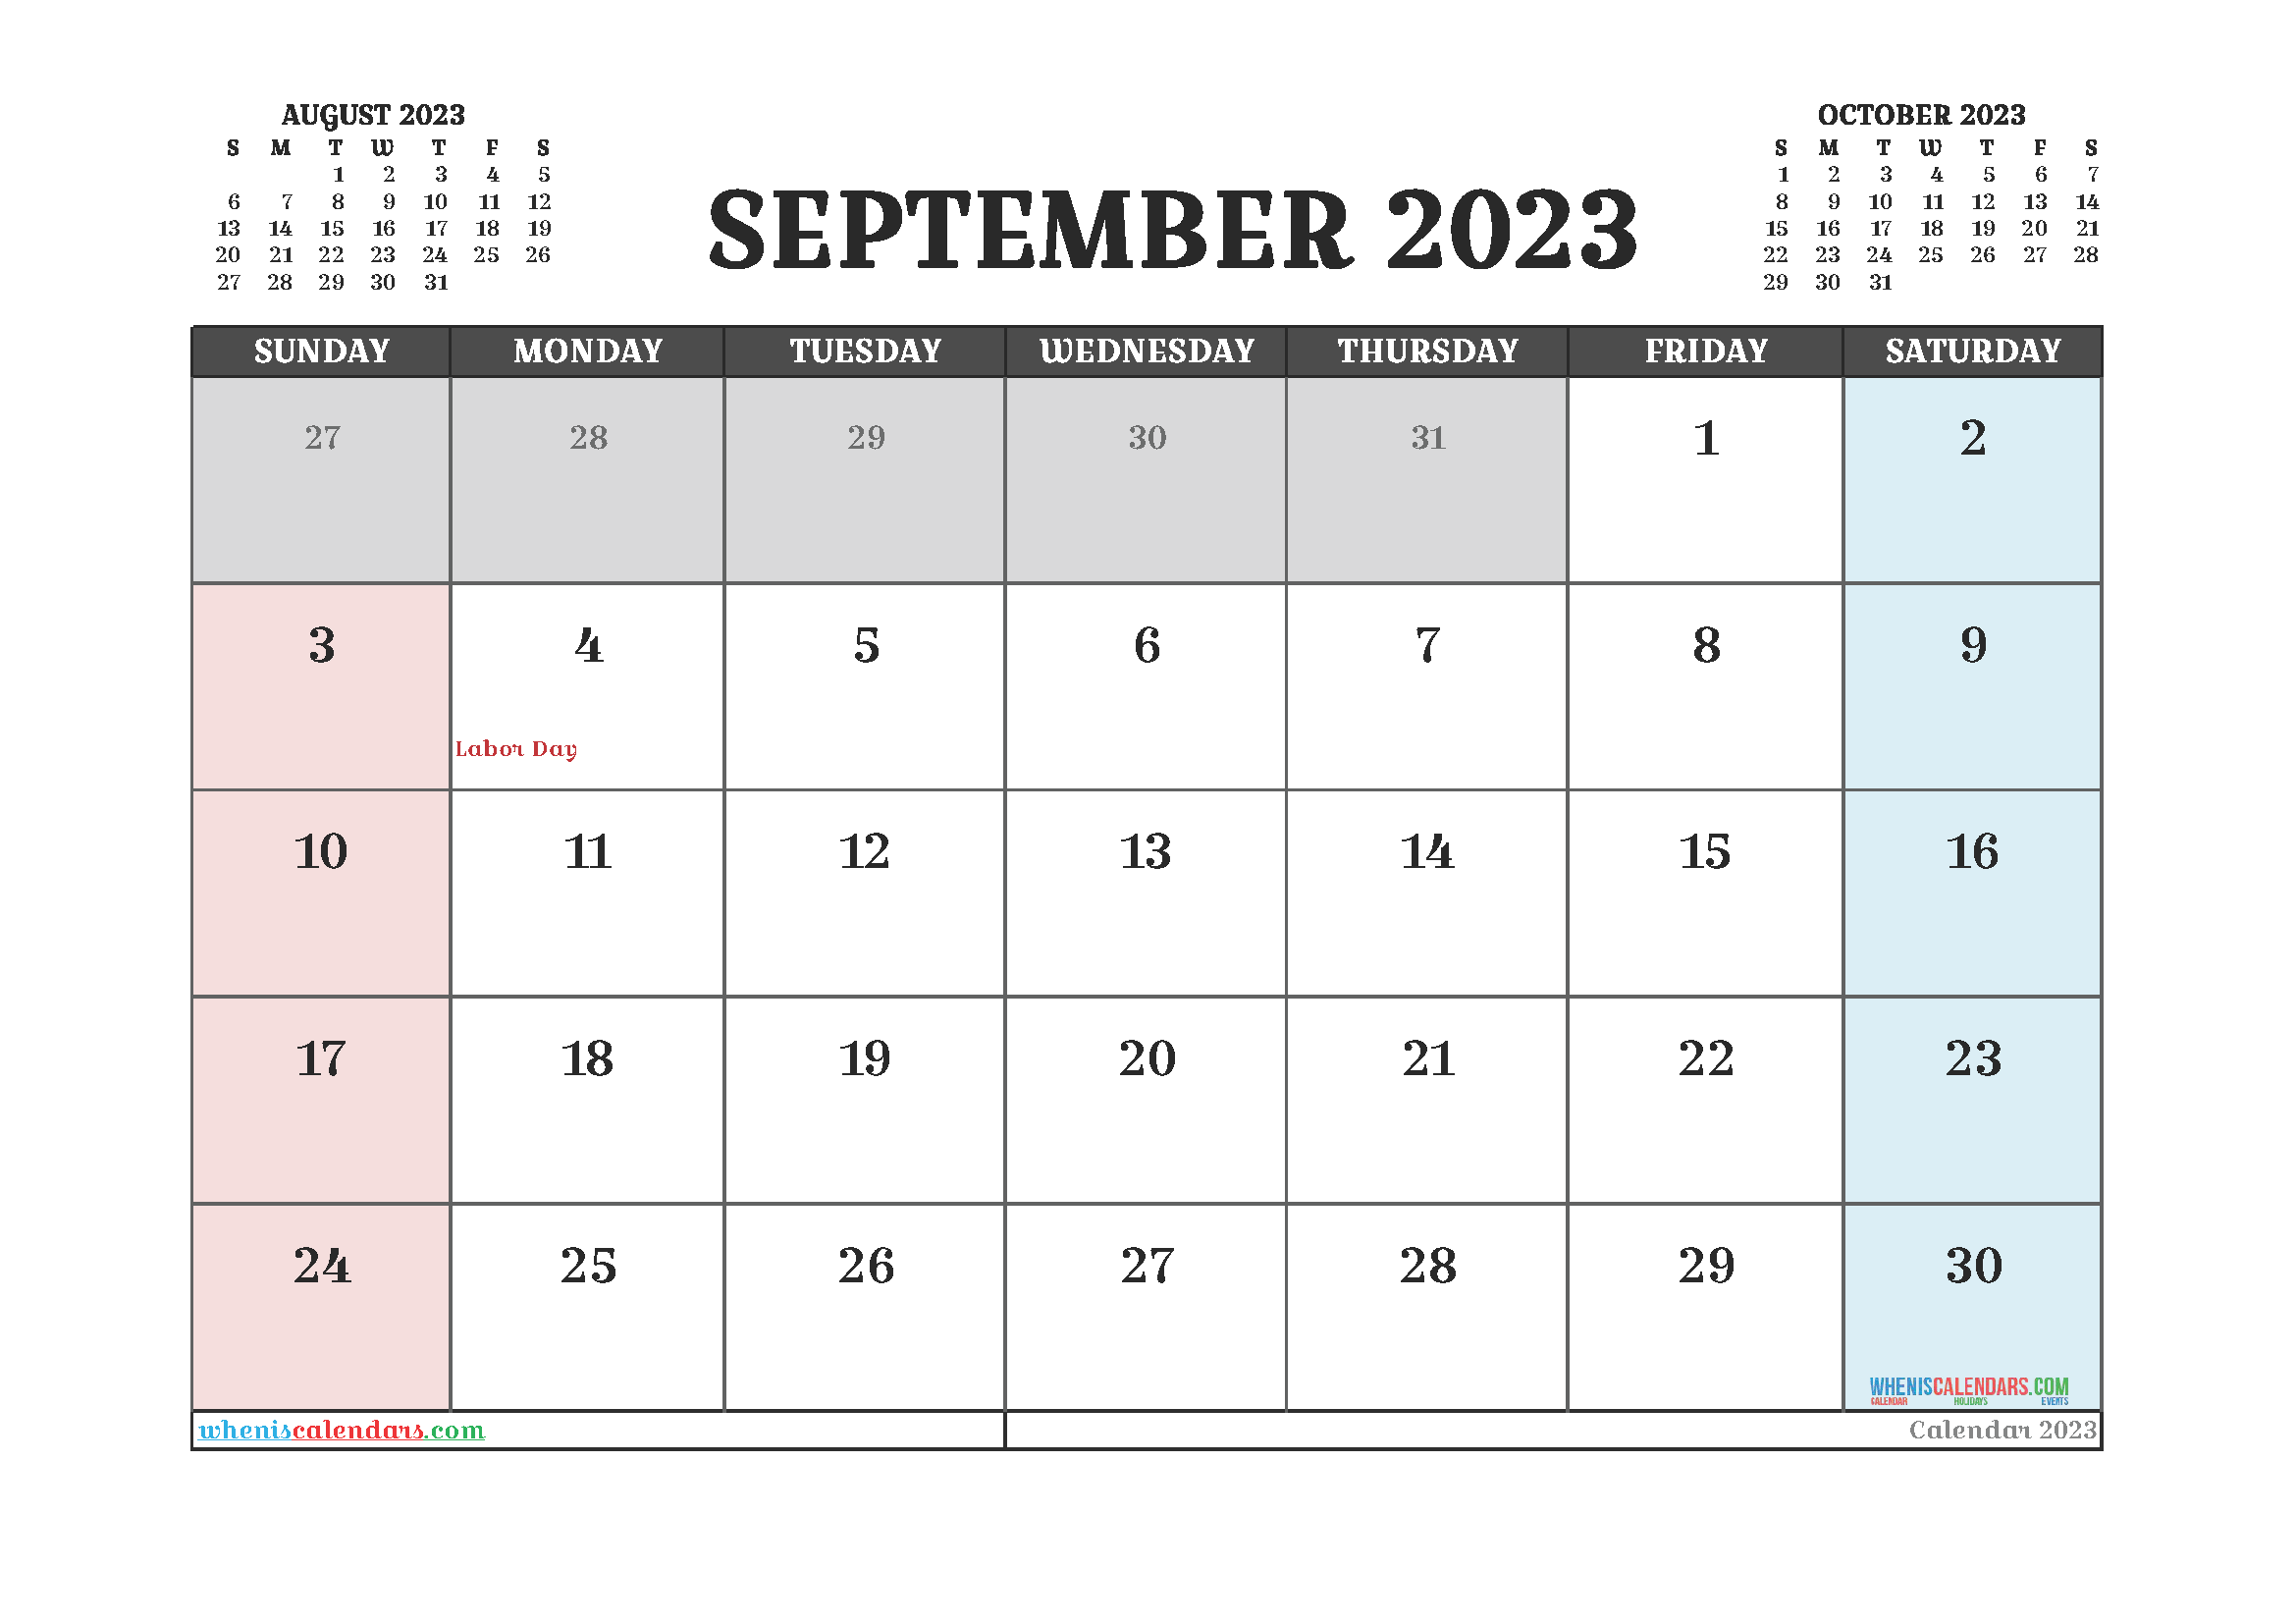 Free Printable September 2023 Calendar